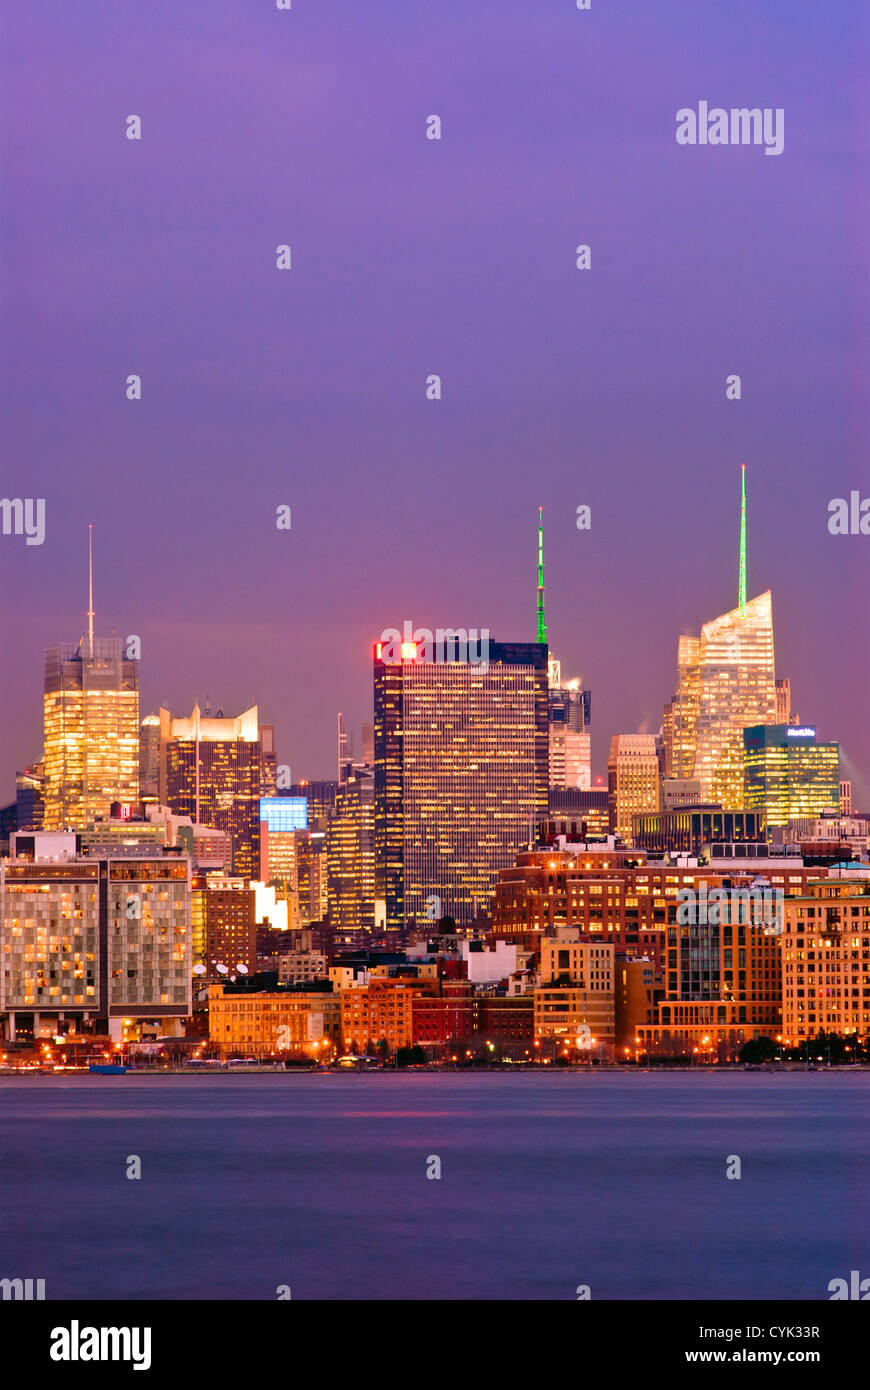 Midtown West Skyline, New York City, Manhattan, darunter die New York Times, One Penn Plaza und Bank of America Buildings. Stockfoto